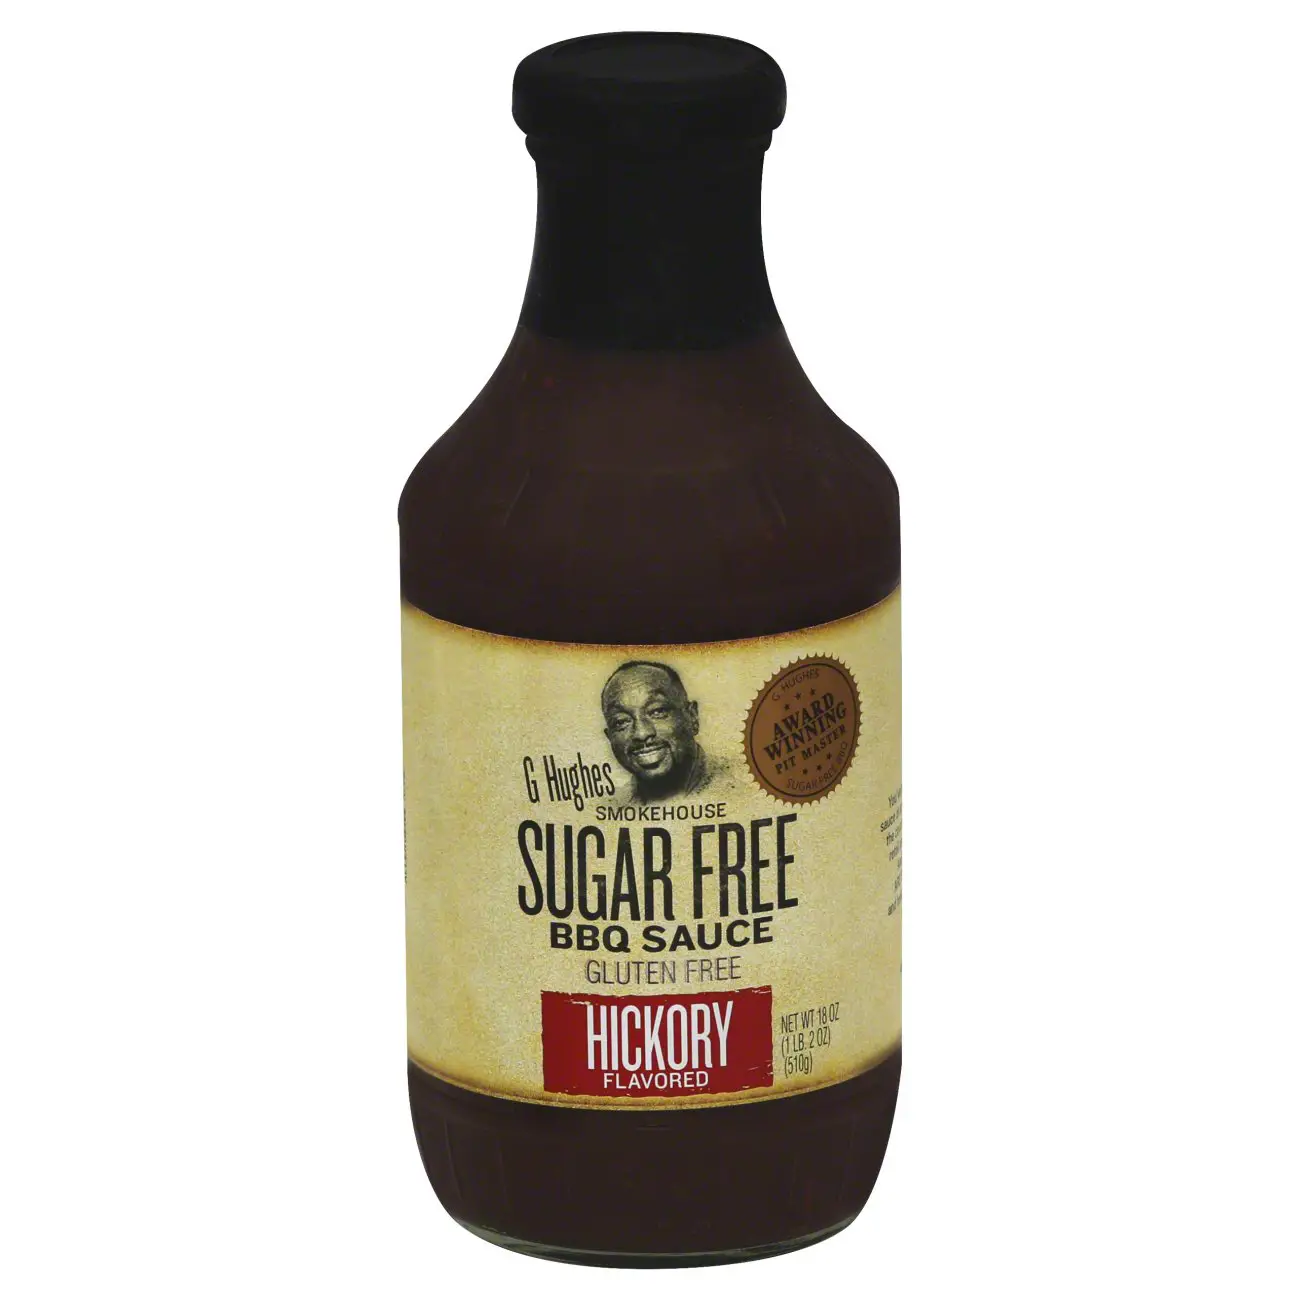 G Hughes Smokehouse Sugar Free Hickory Flavored BBQ Sauce ...